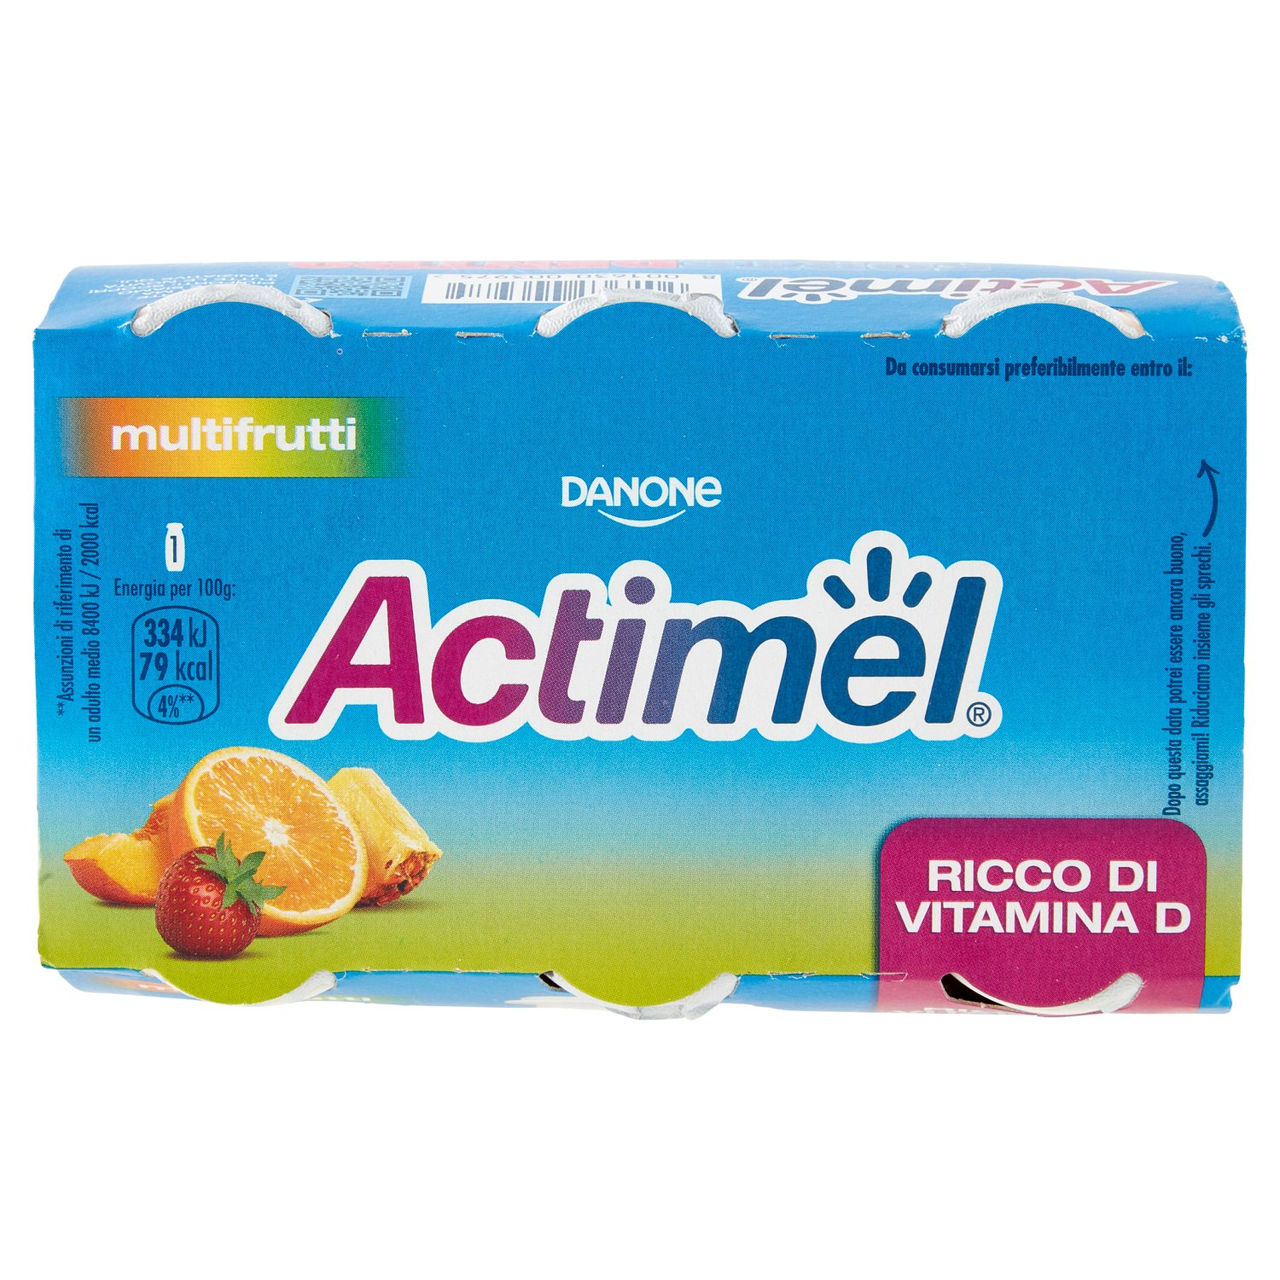 Actimel multifrutti 6 x 100 g